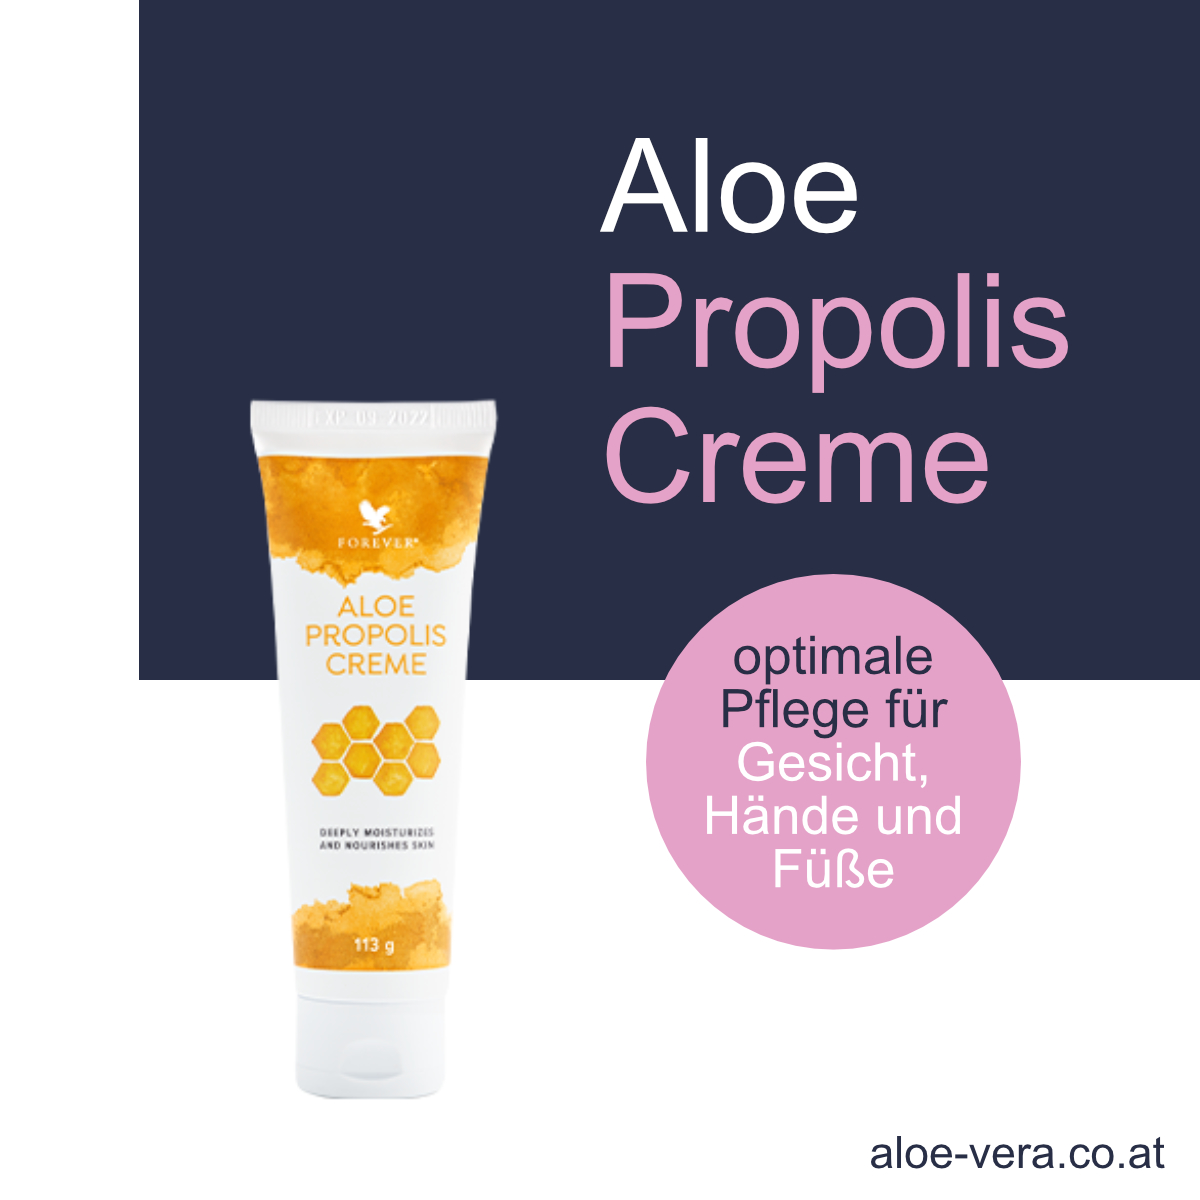 Forever Aloe Vera Propolis Creme Gesichtscreme Handcreme Fußcreme Pflegecreme Kälteschutzcreme kaufen